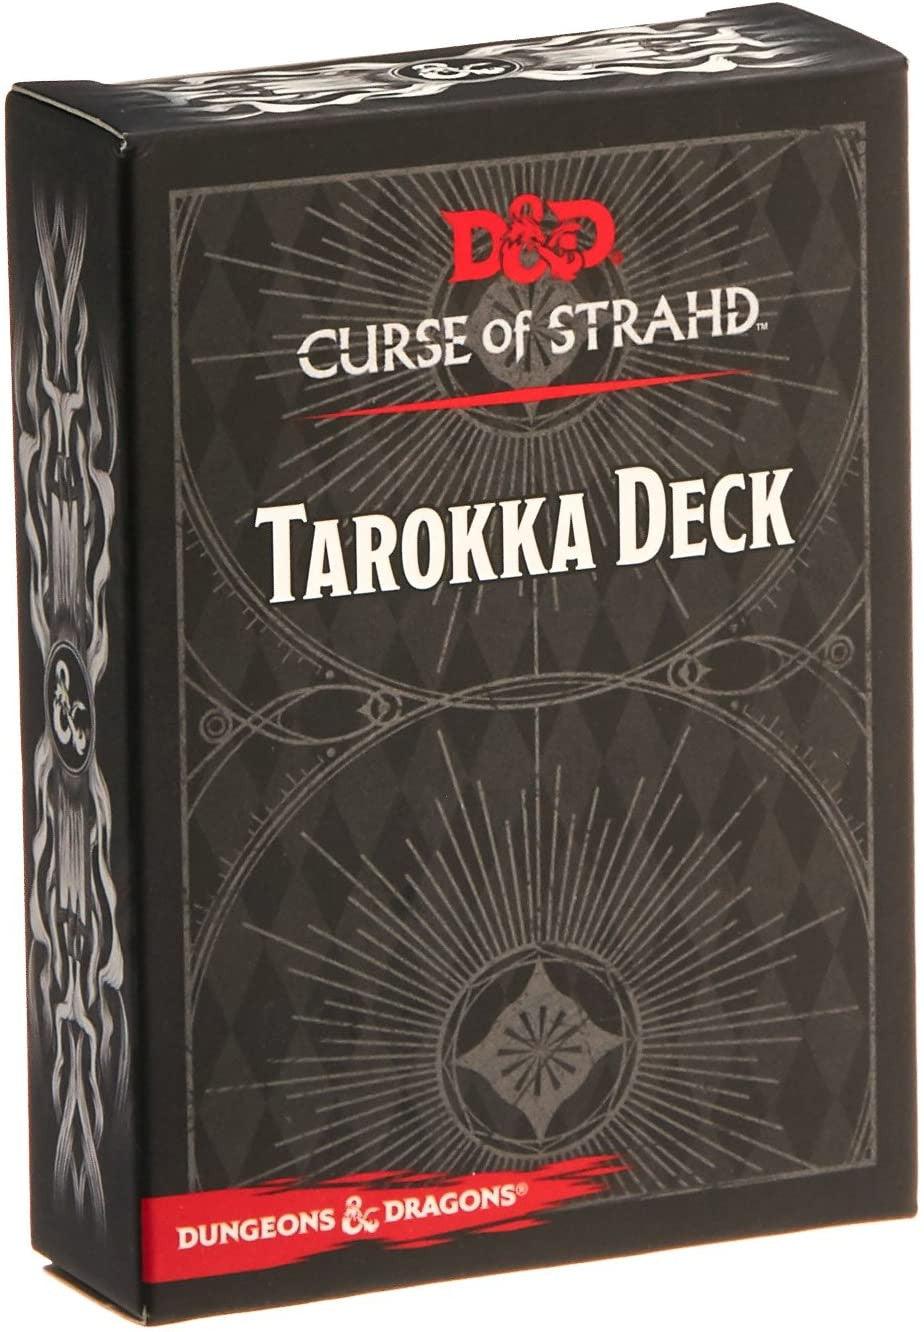 VR-101243 D&D Dungeons & Dragons Curse of Strahd Tarokka Deck - Wizards of the Coast - Titan Pop Culture